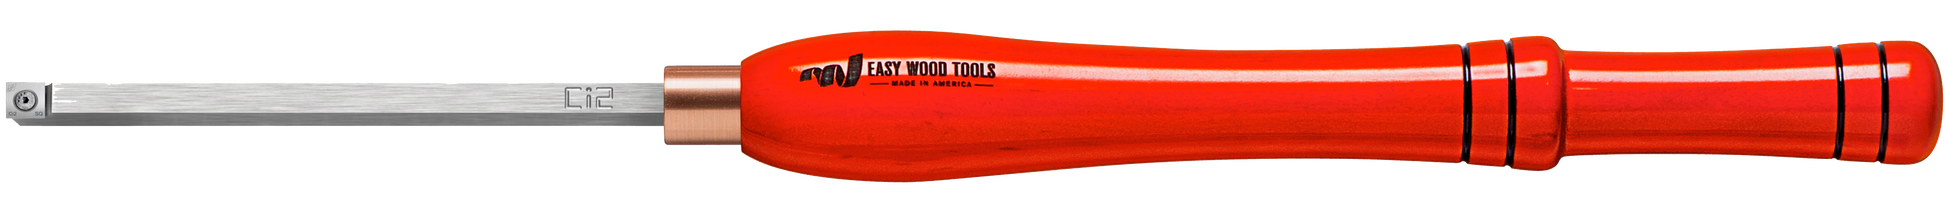 Mid Size Carbide Tool EWT Rougher 2200